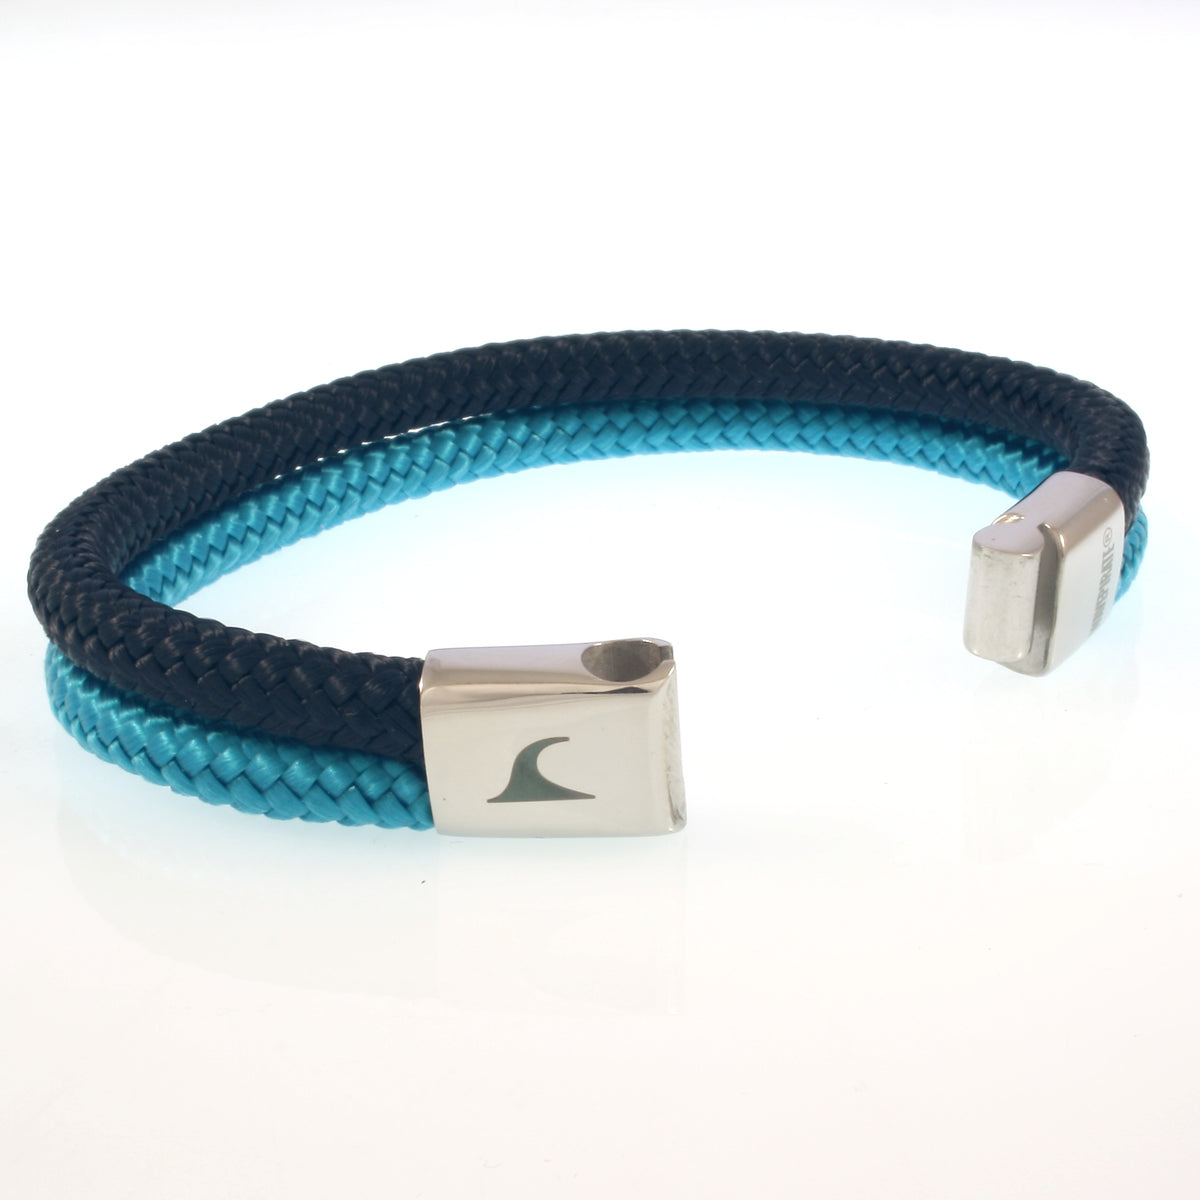 Herren-Segeltau-Armband-Tarifa-nachtblau-blau-geflochten-Edelstahlverschluss-offen-wavepirate-shop-st